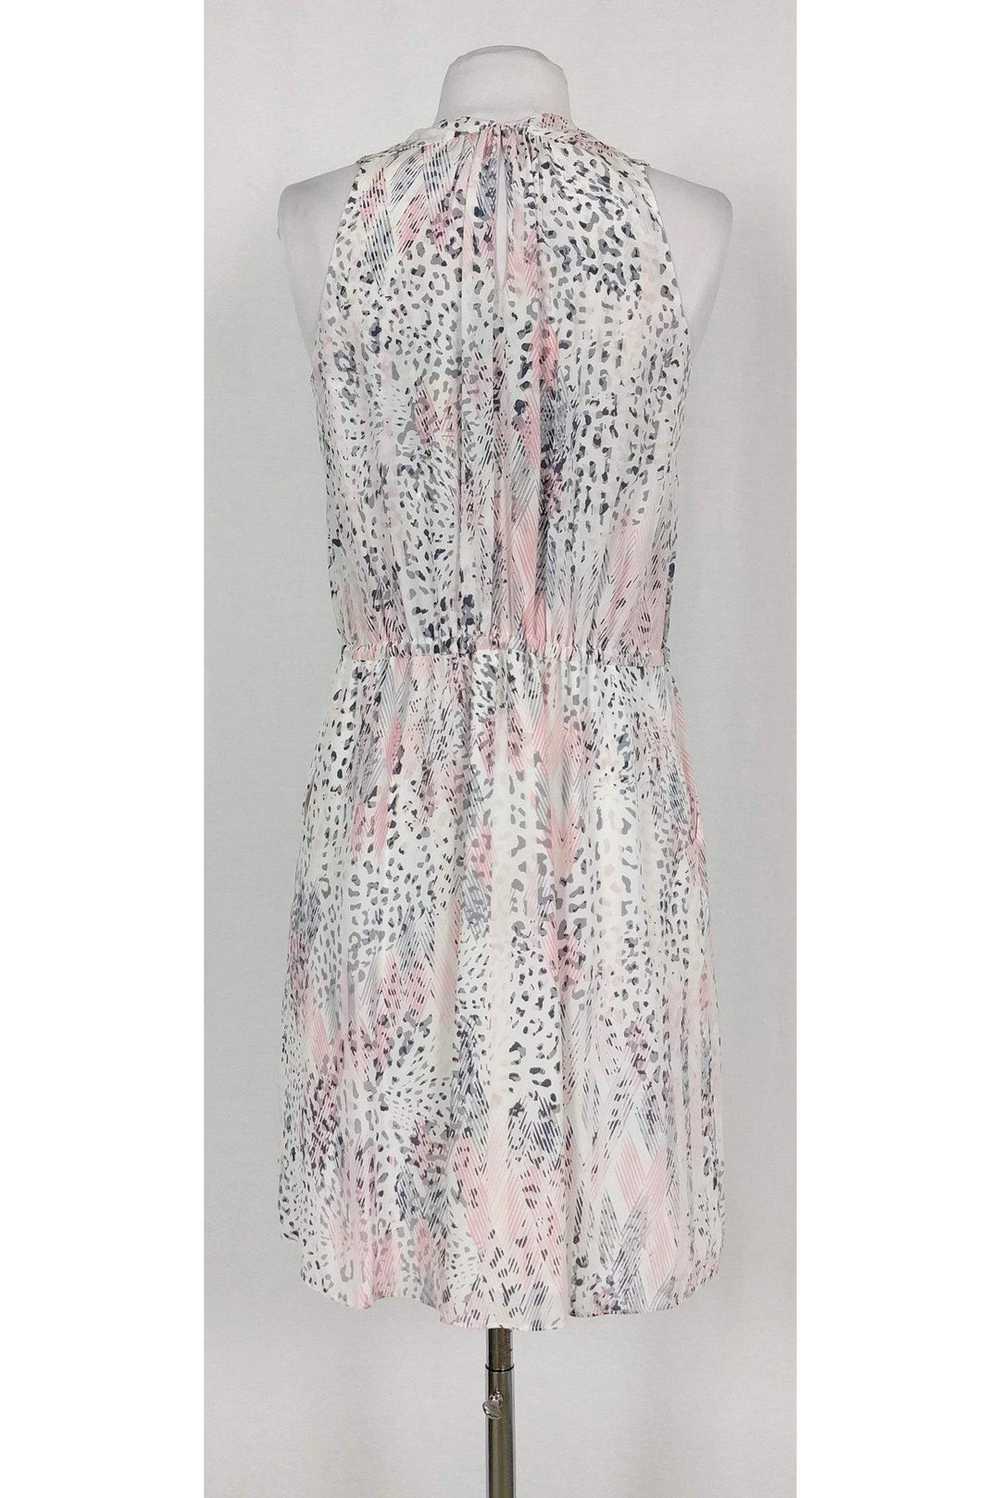 Rebecca Taylor - Pink & Grey Animal Print Dress S… - image 3